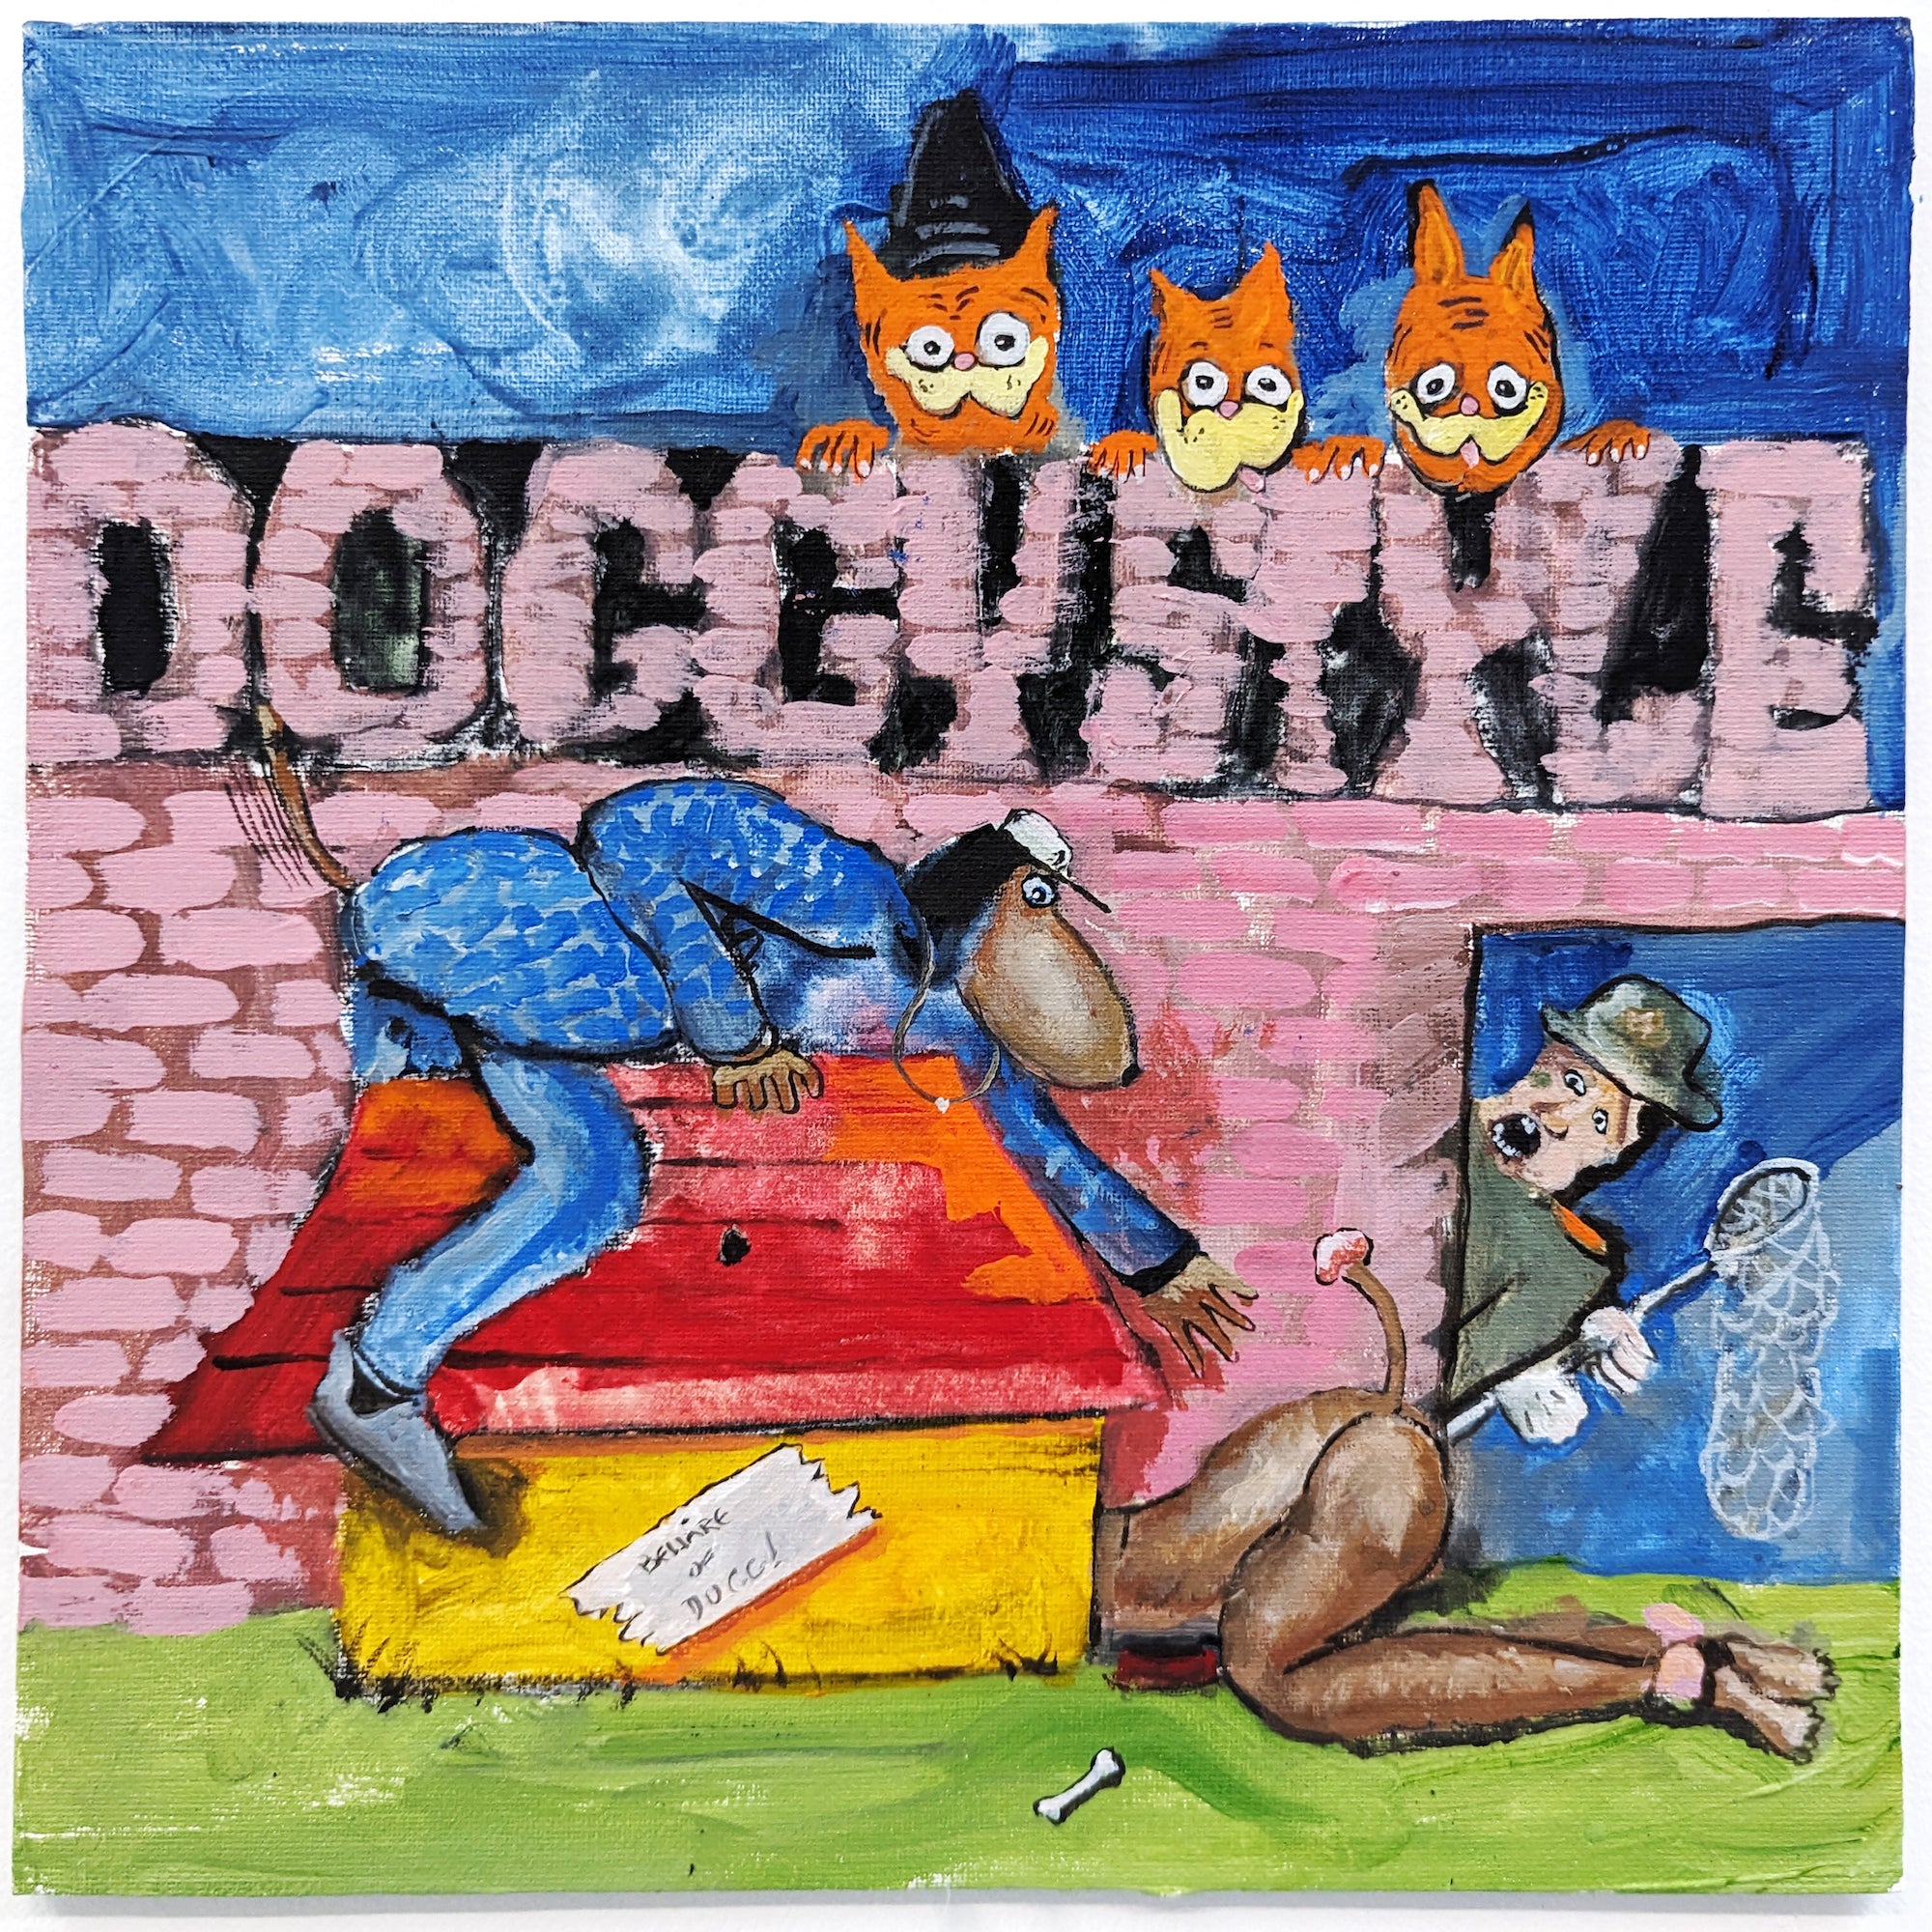 Jac Lahav, "Snoop Dog (Doggy Style)"